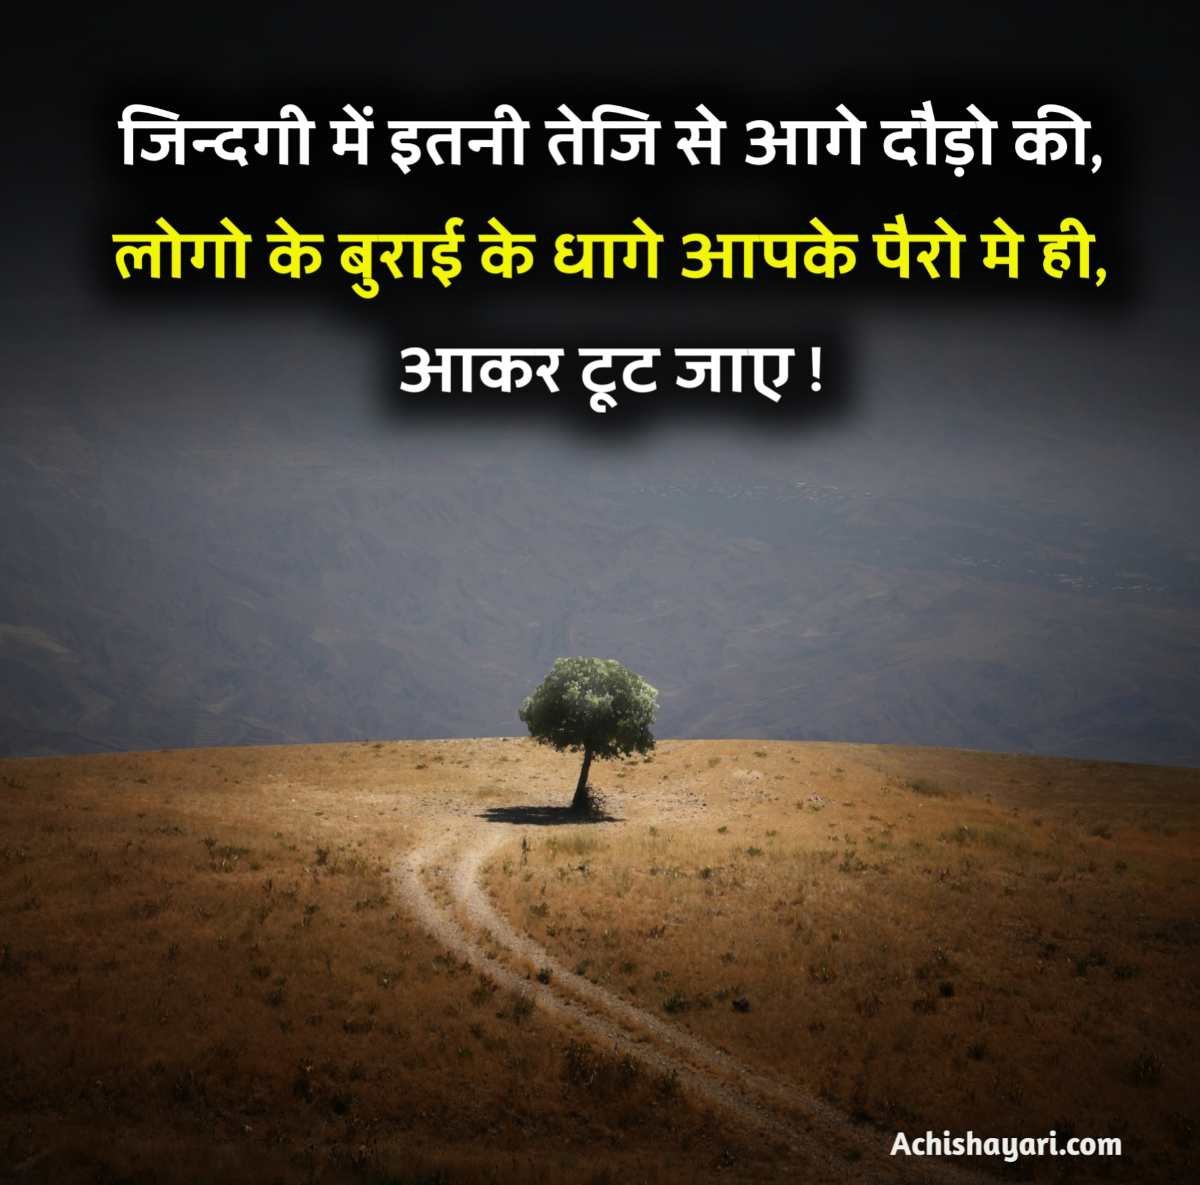 Life Quotes in Hindi Whatsapp Image